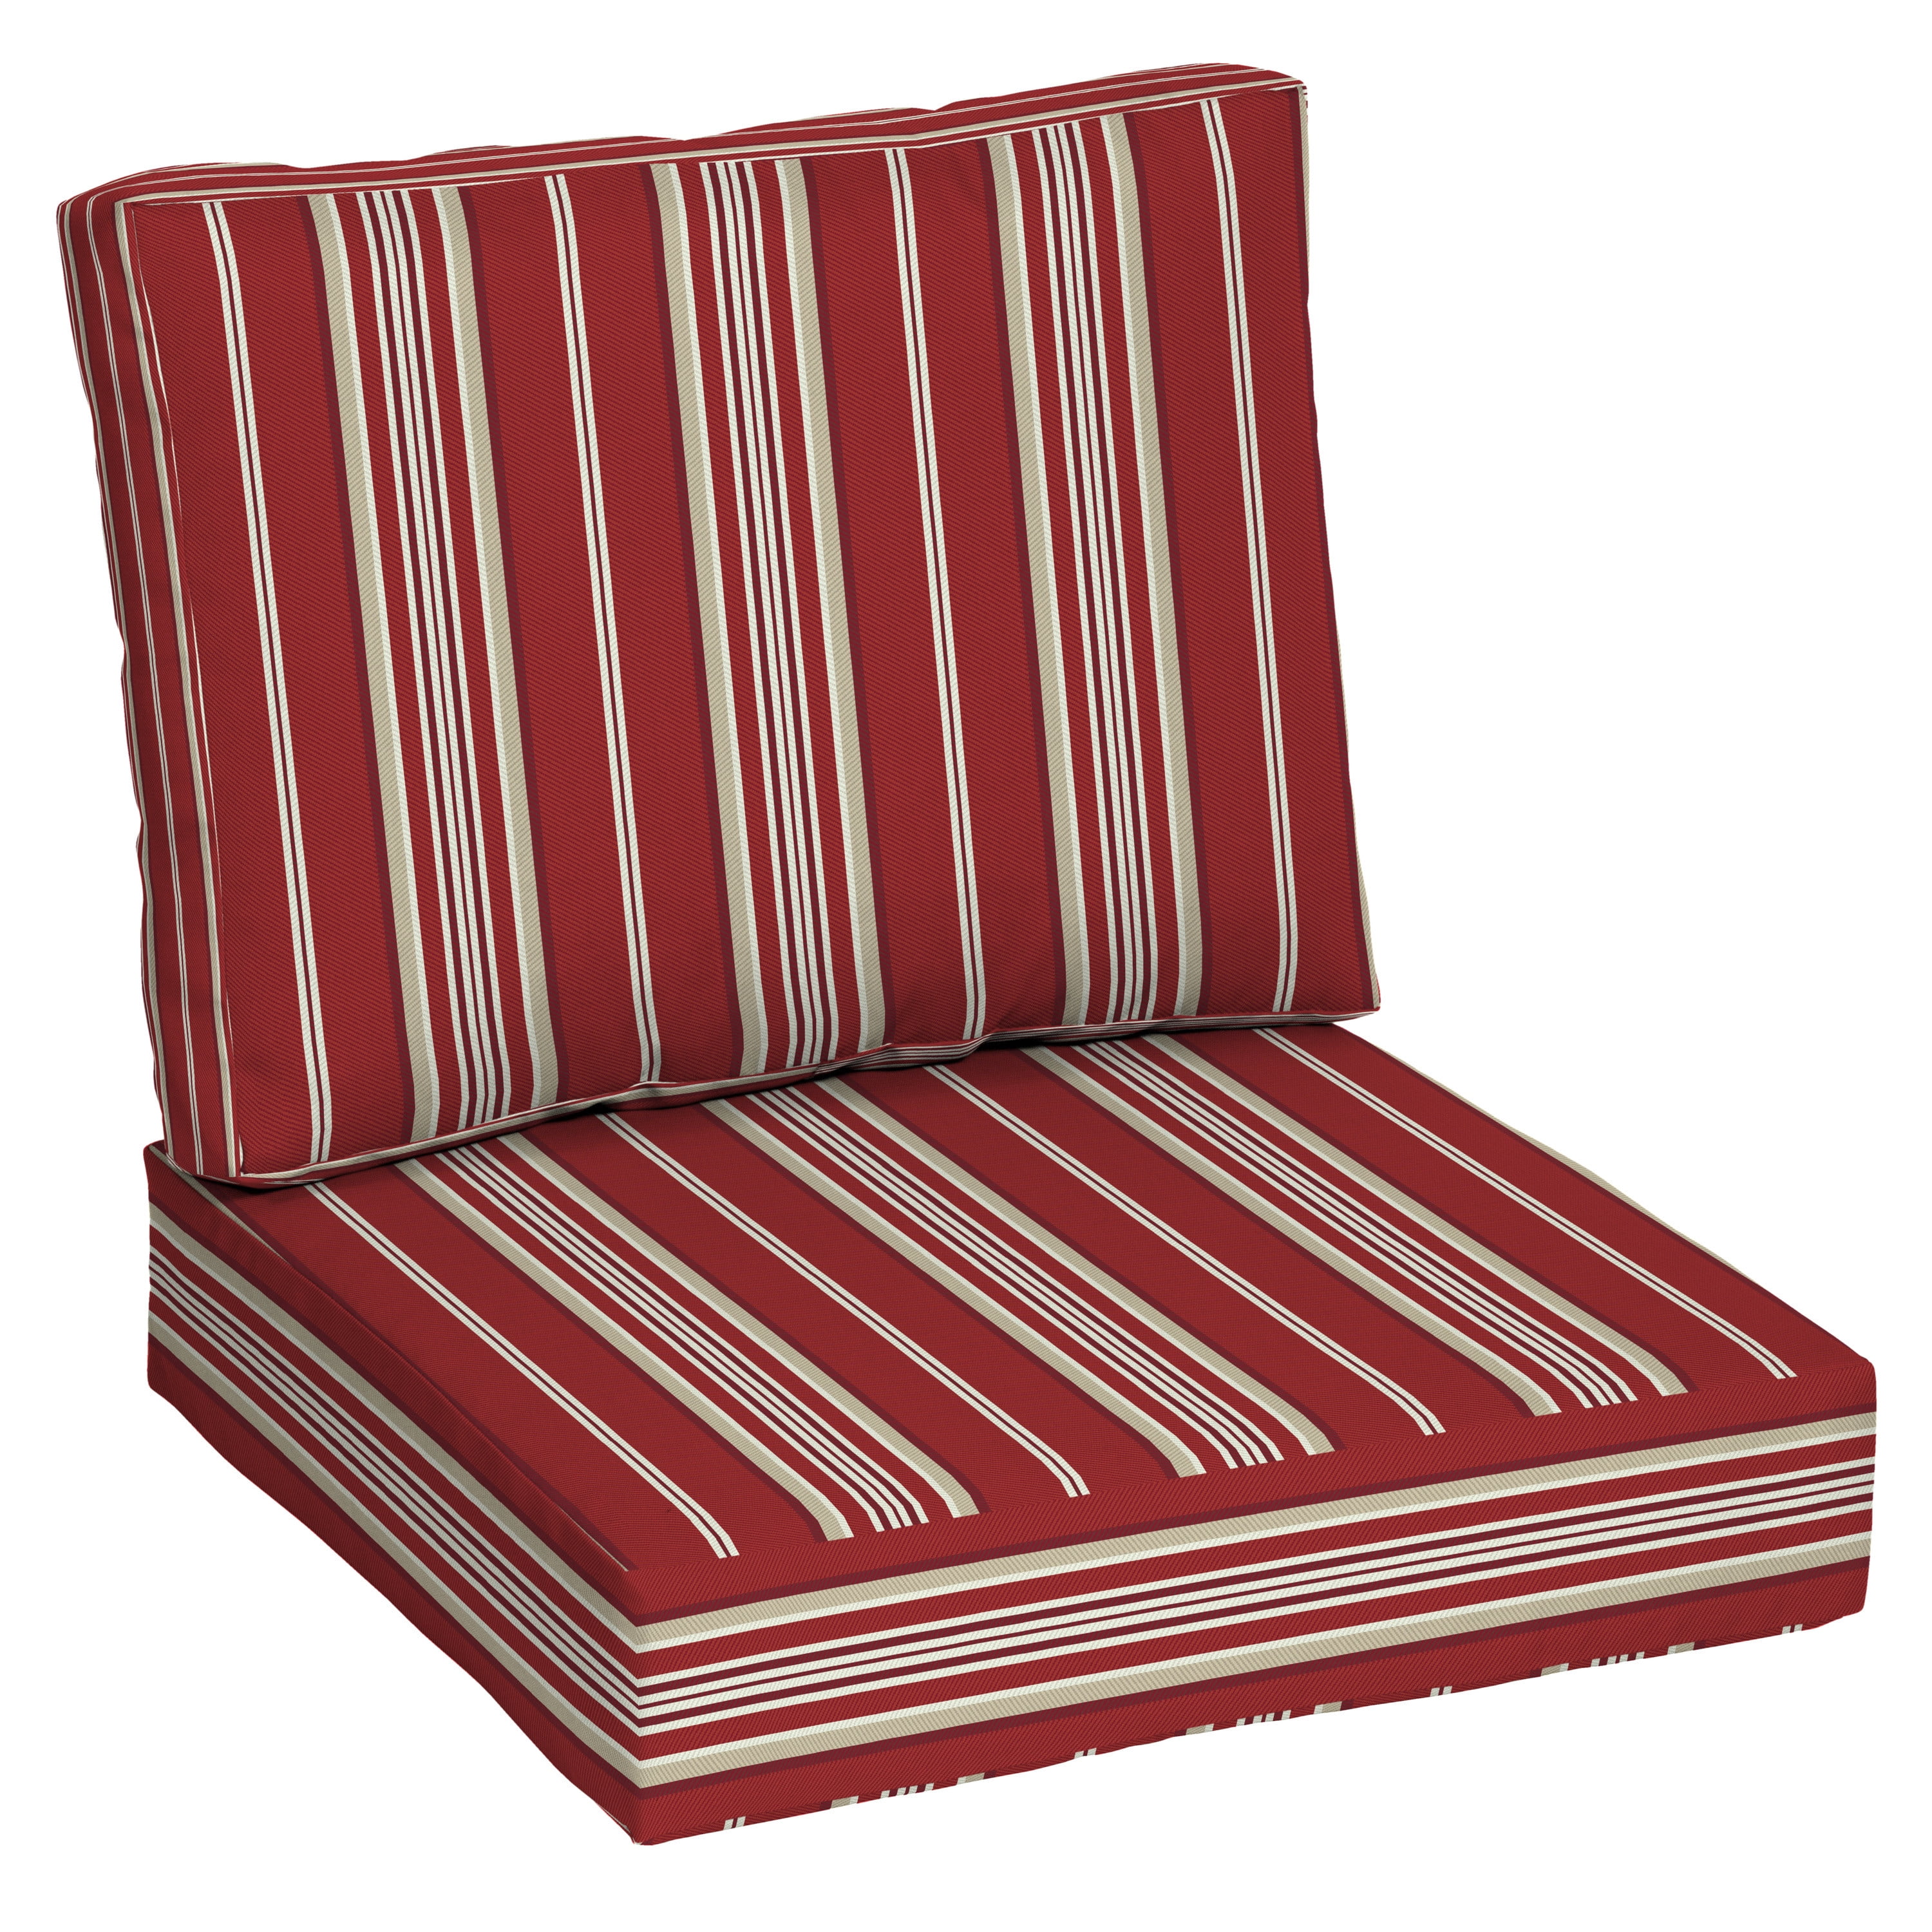 Sunnydaze Outdoor Round Bistro Seat Cushion - Earth Tone Stripes